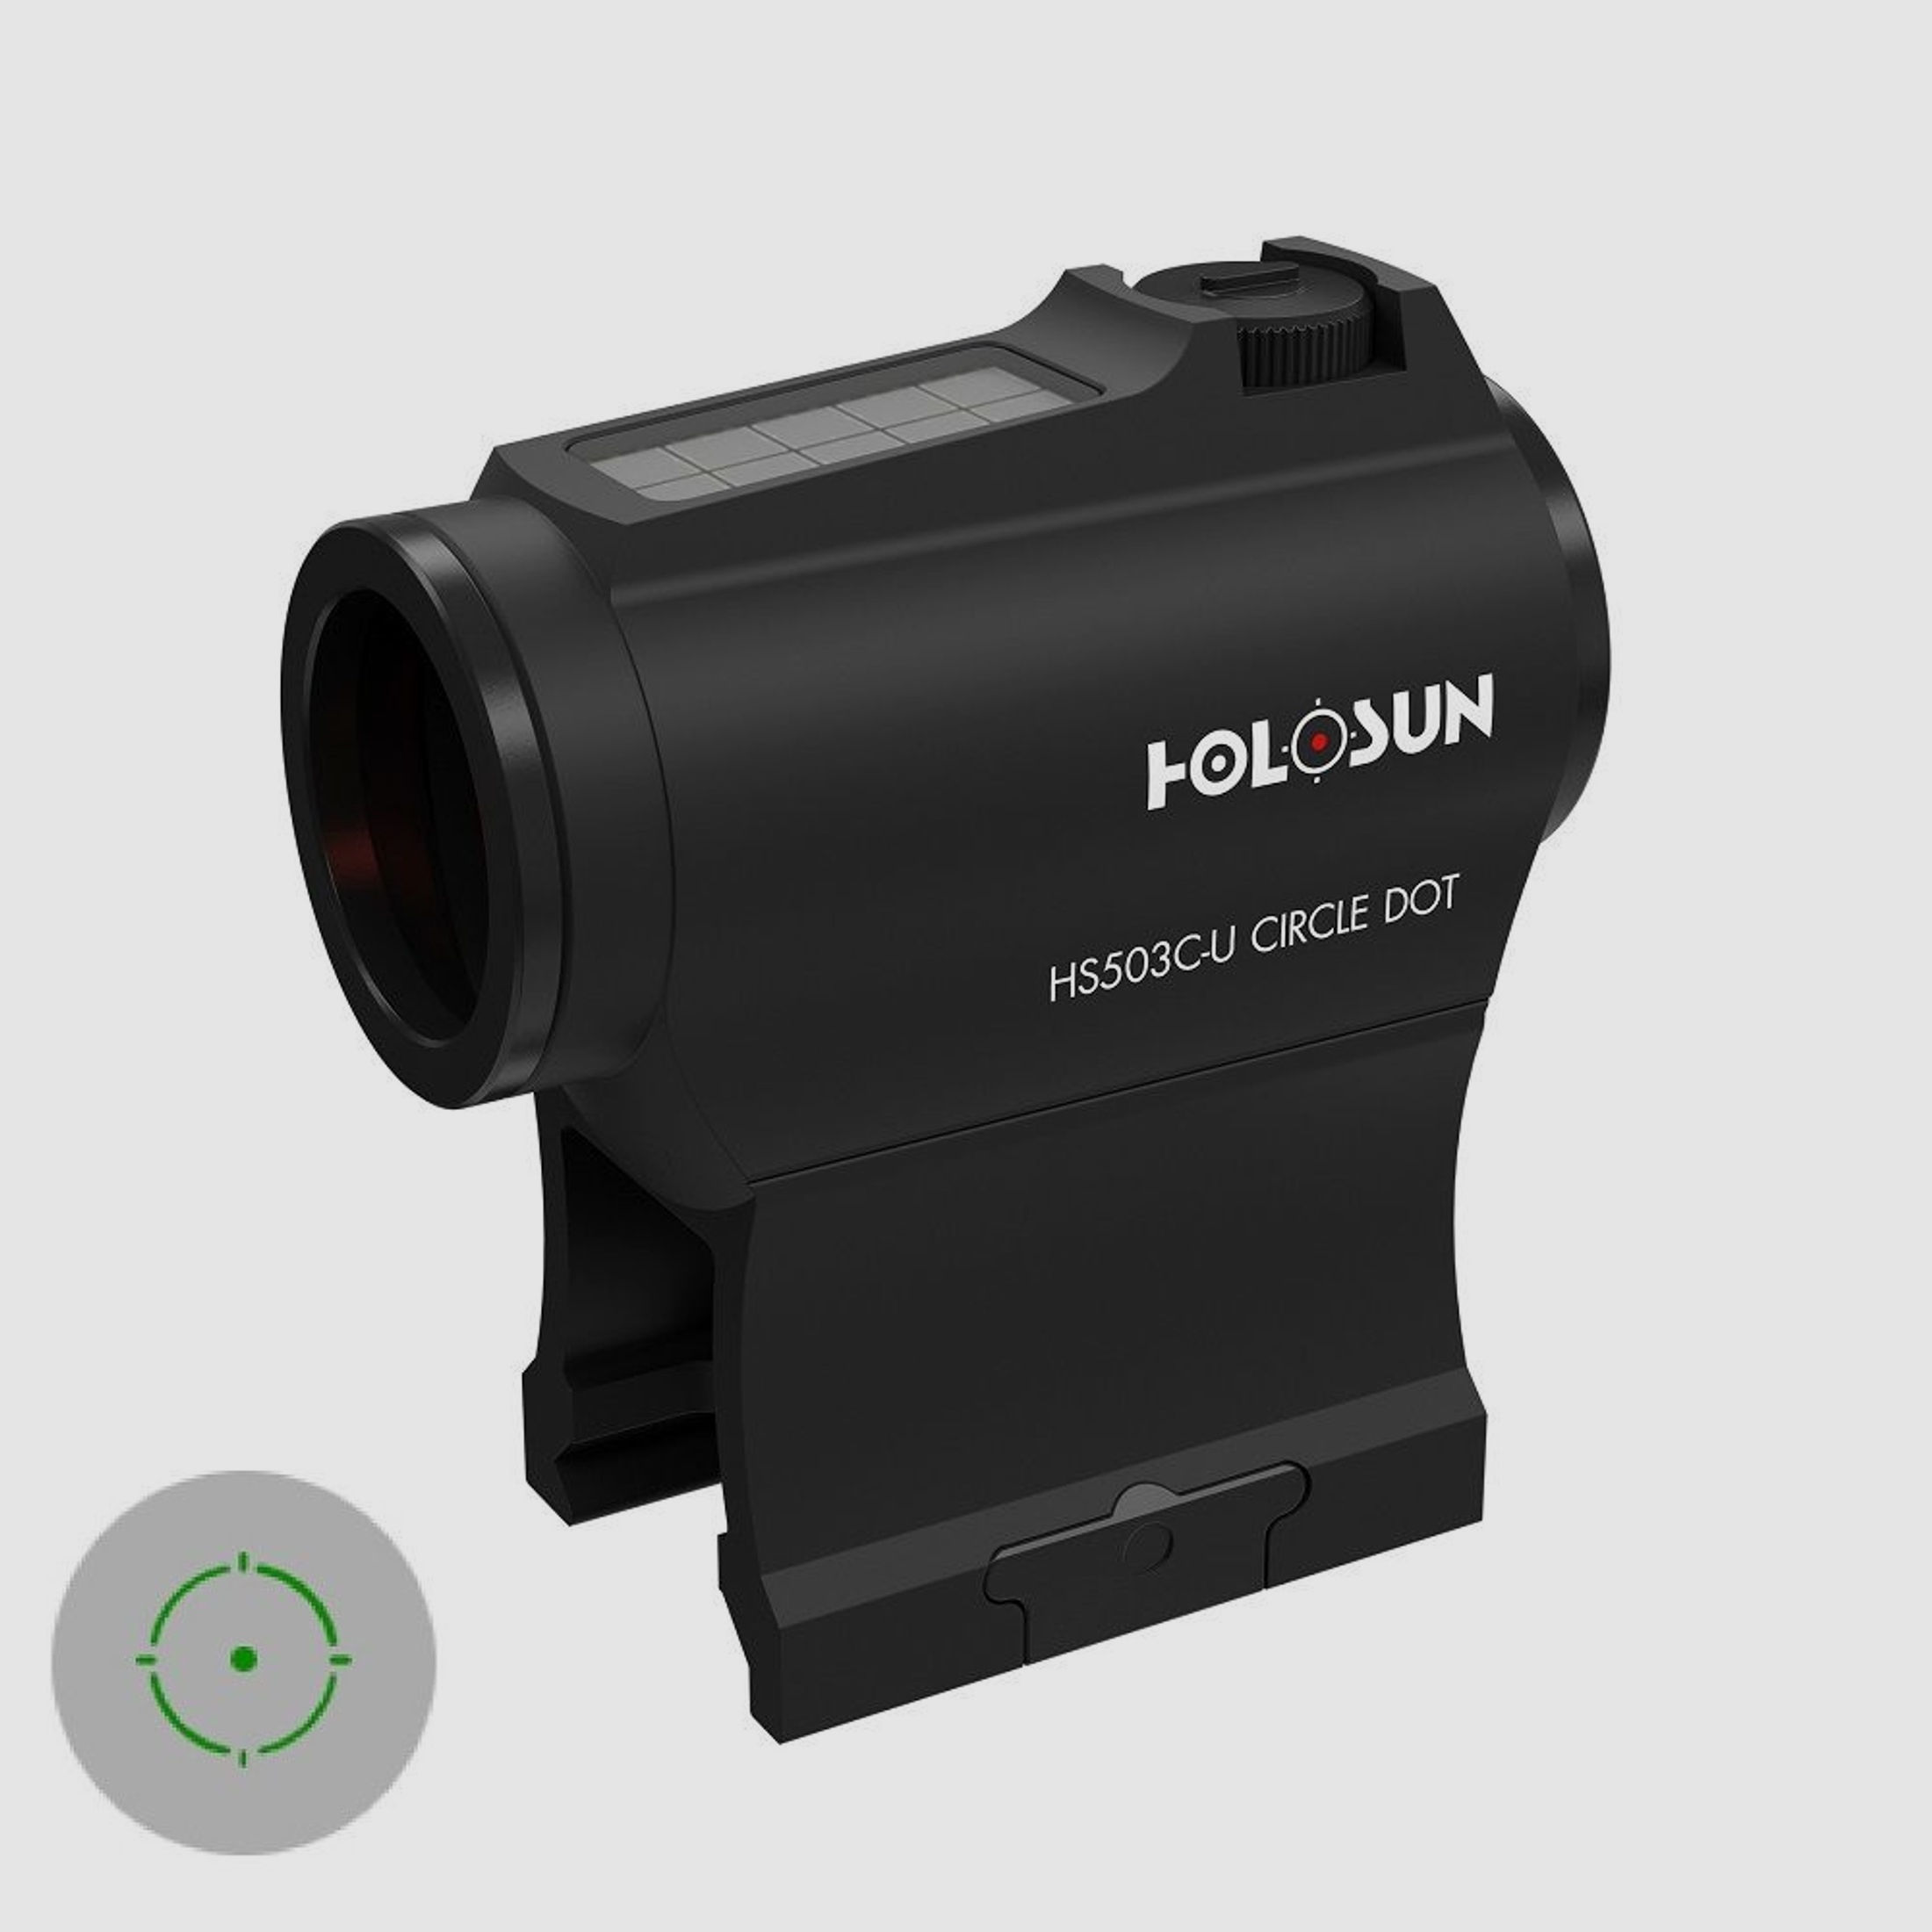 Holosun HE503C-U-GR Leuchtpunktvisier